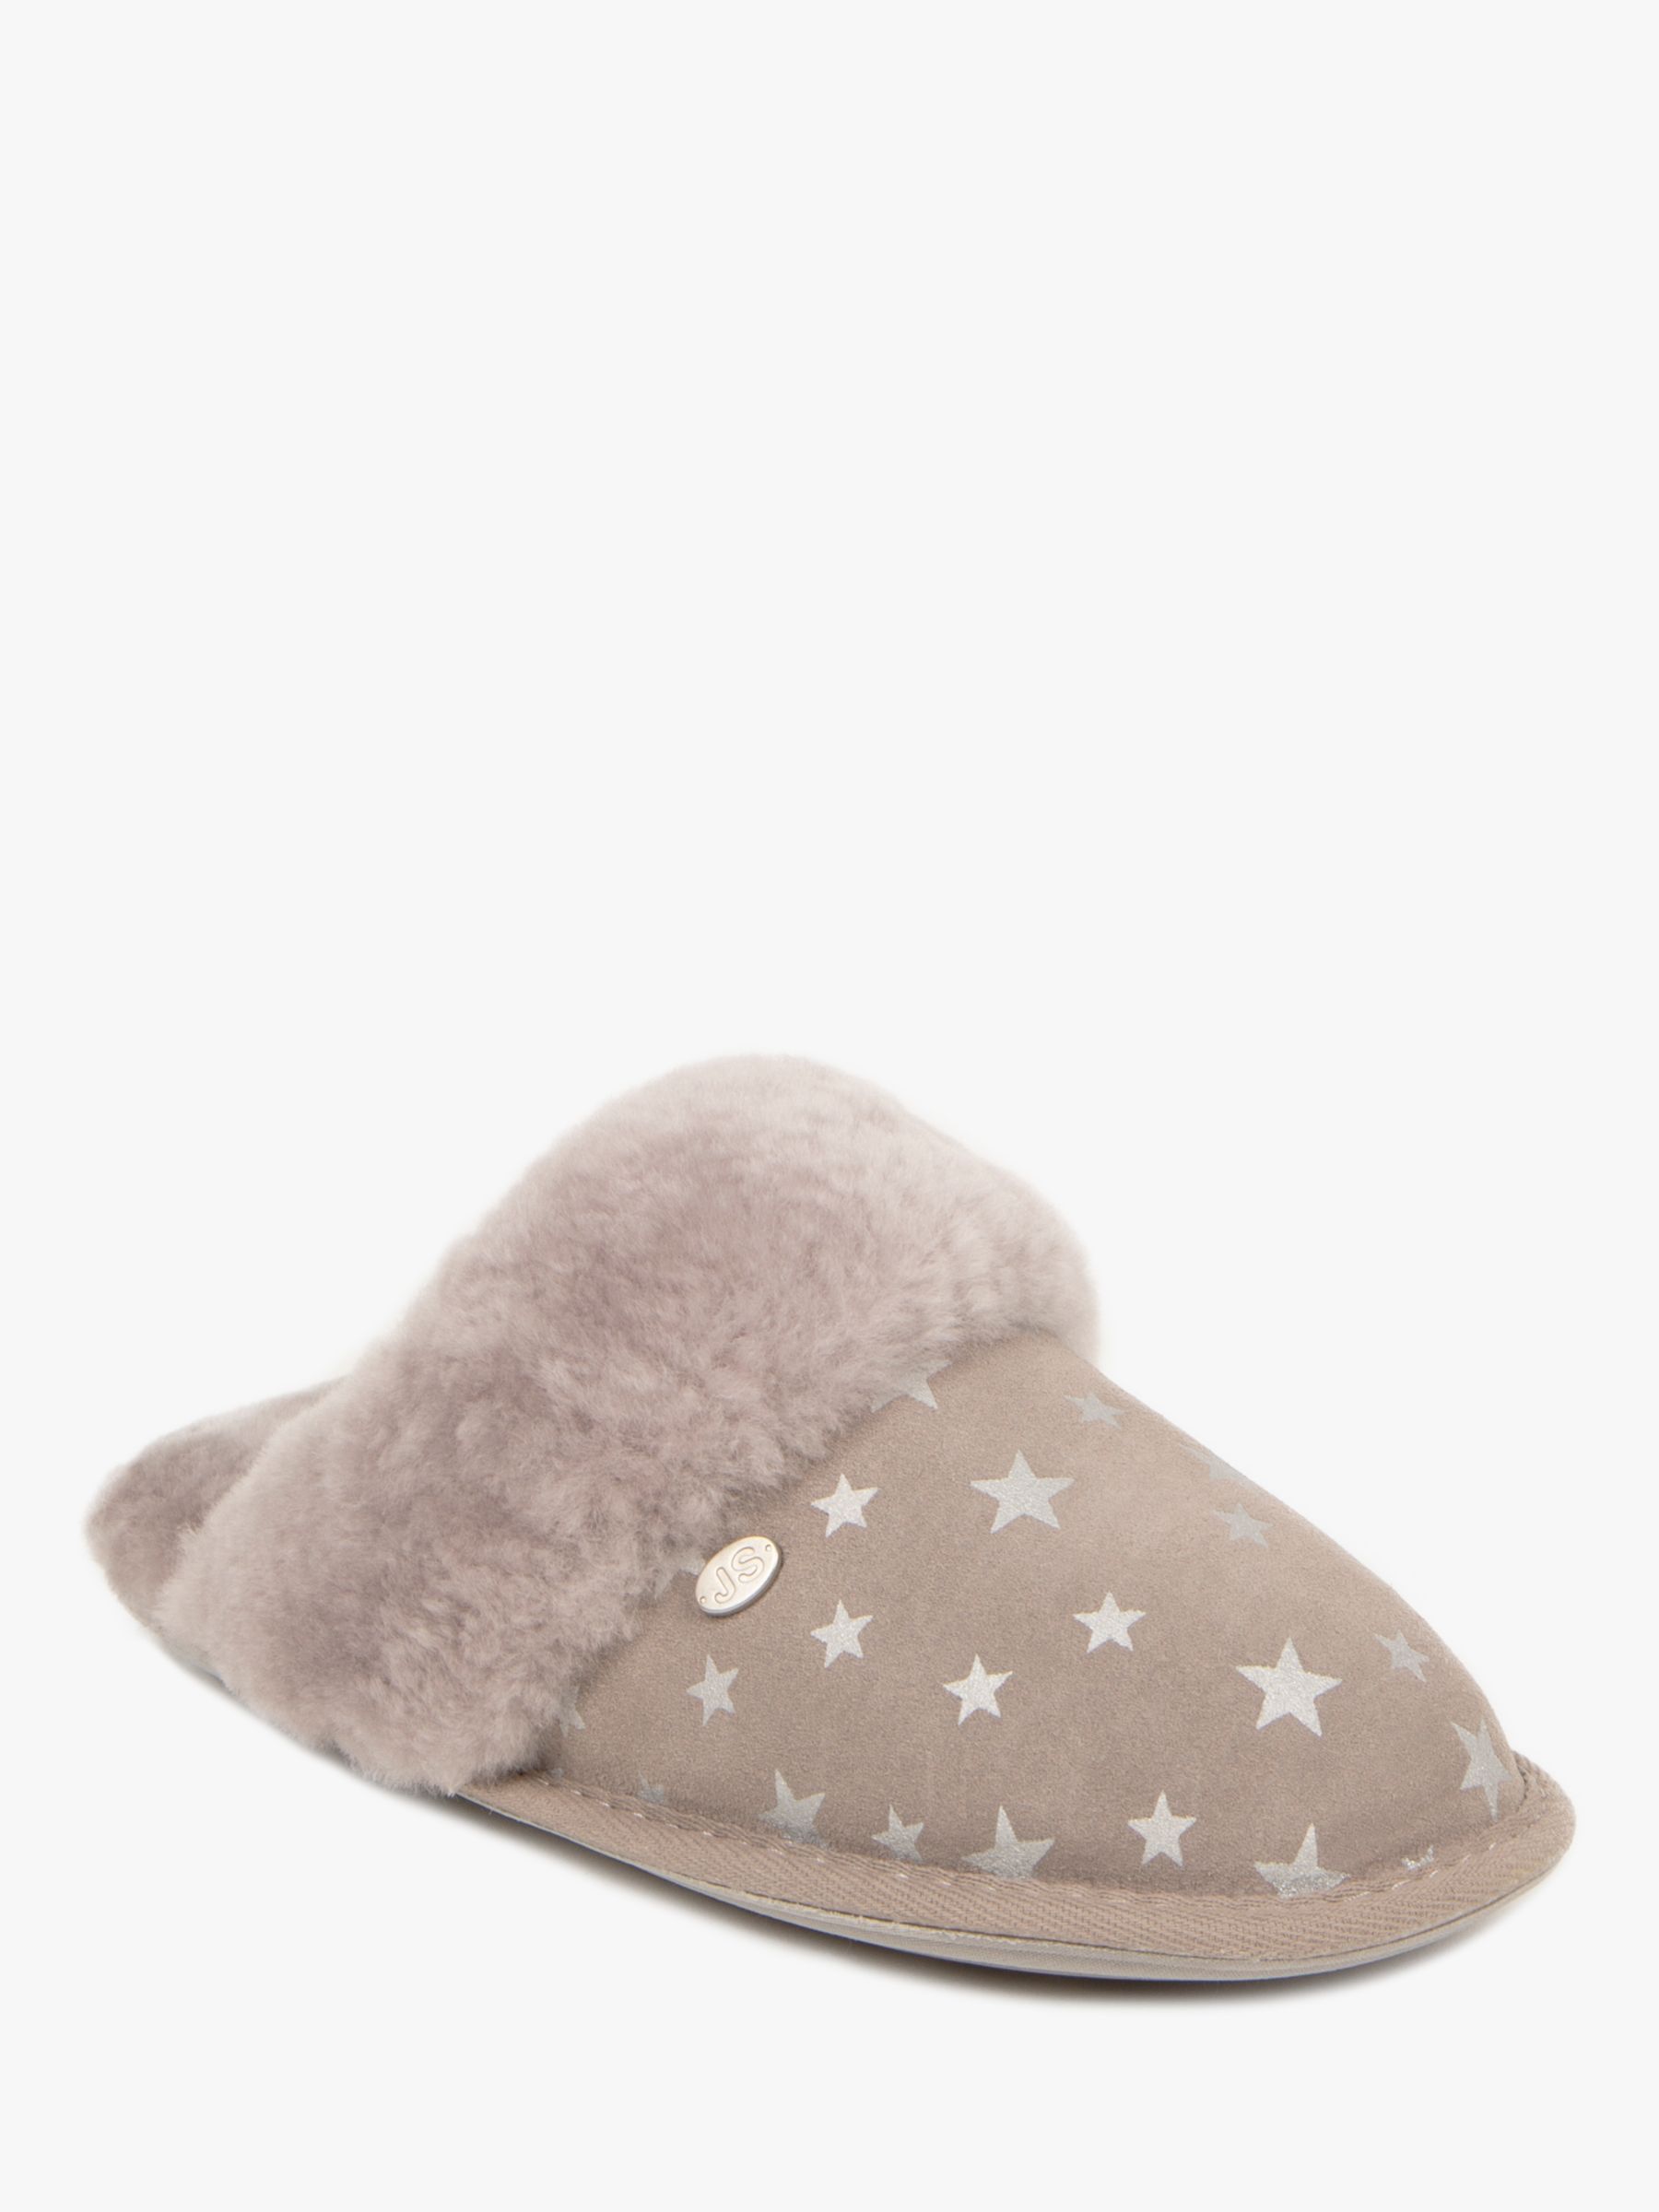 Buy Just Sheepskin Duchess Star Print Suede Mule Slippers Online at johnlewis.com